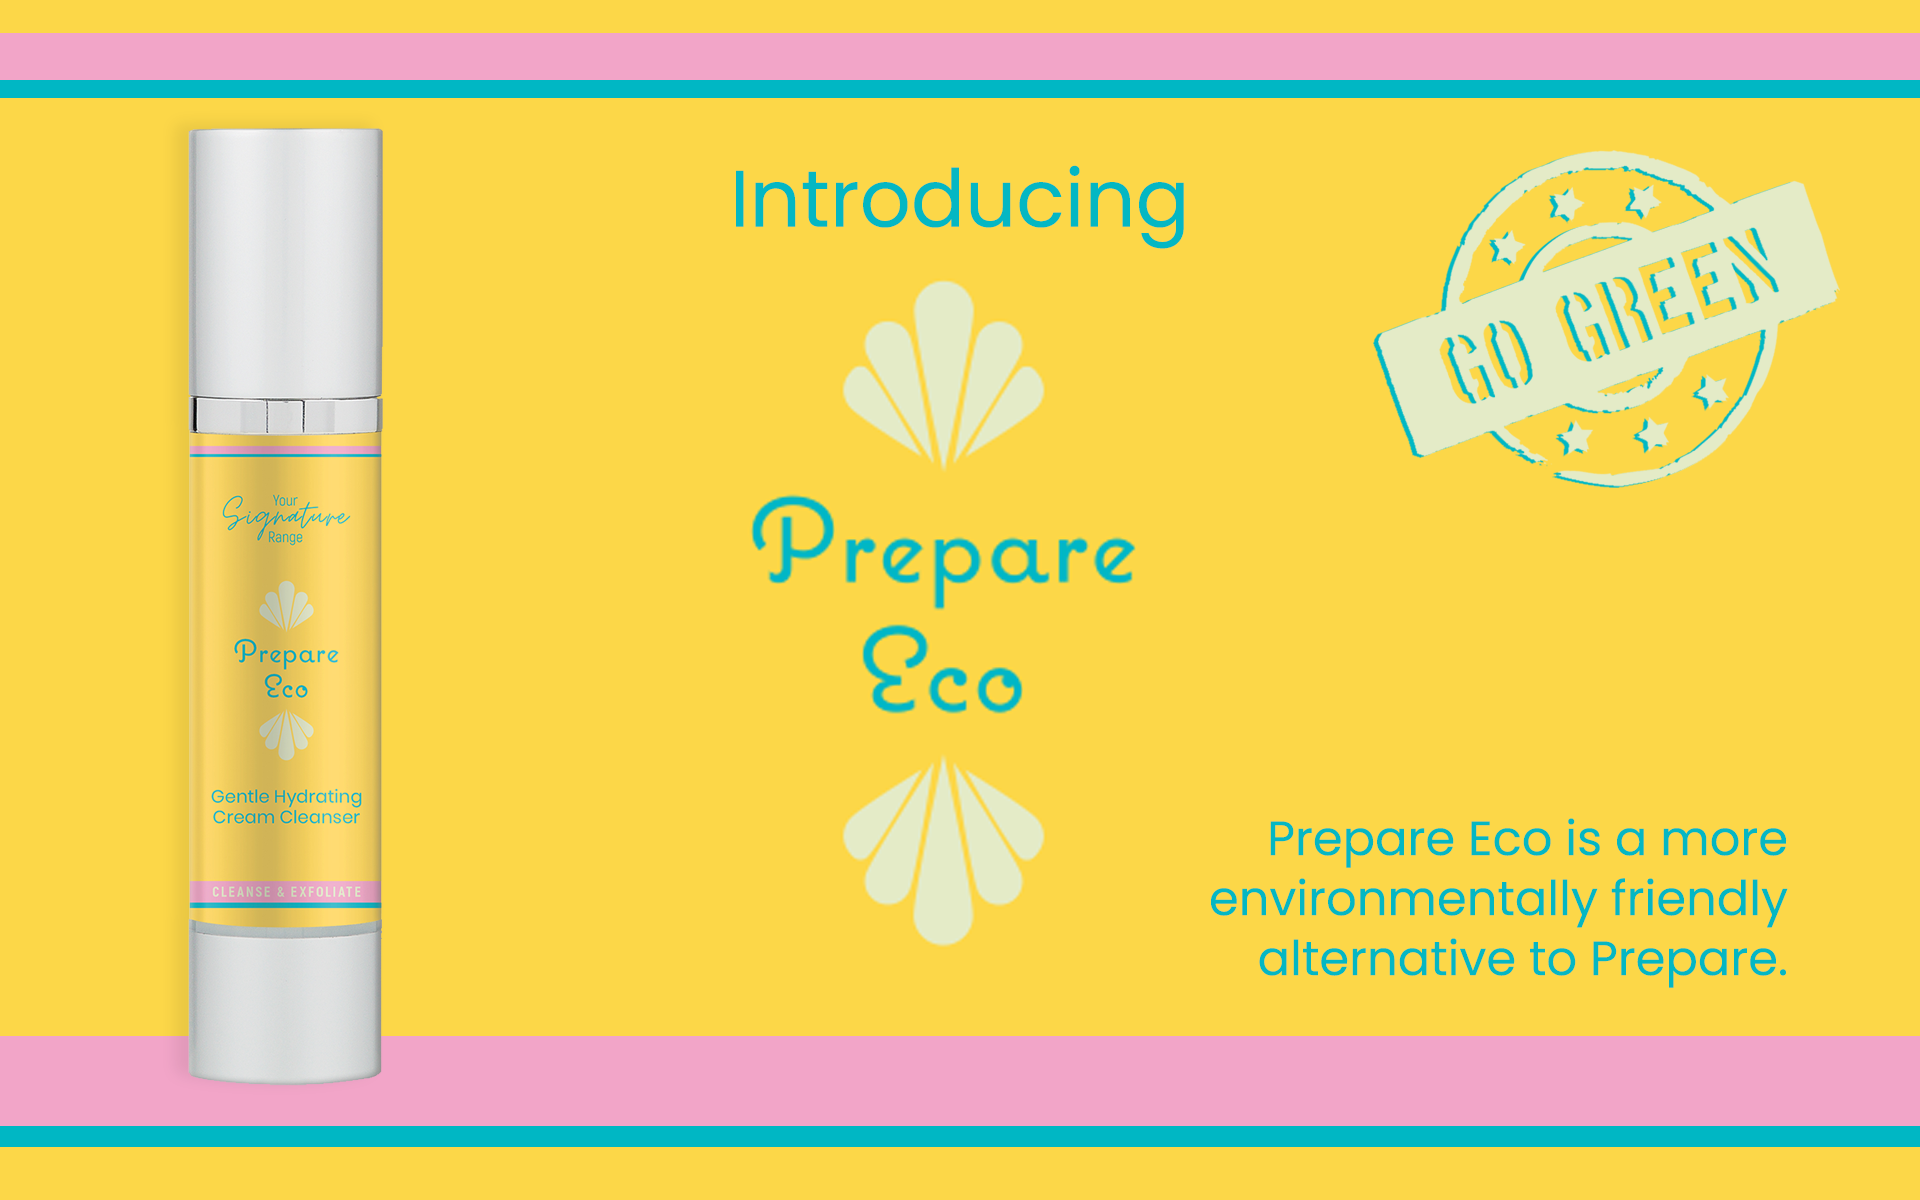 Introducing Prepare ECO